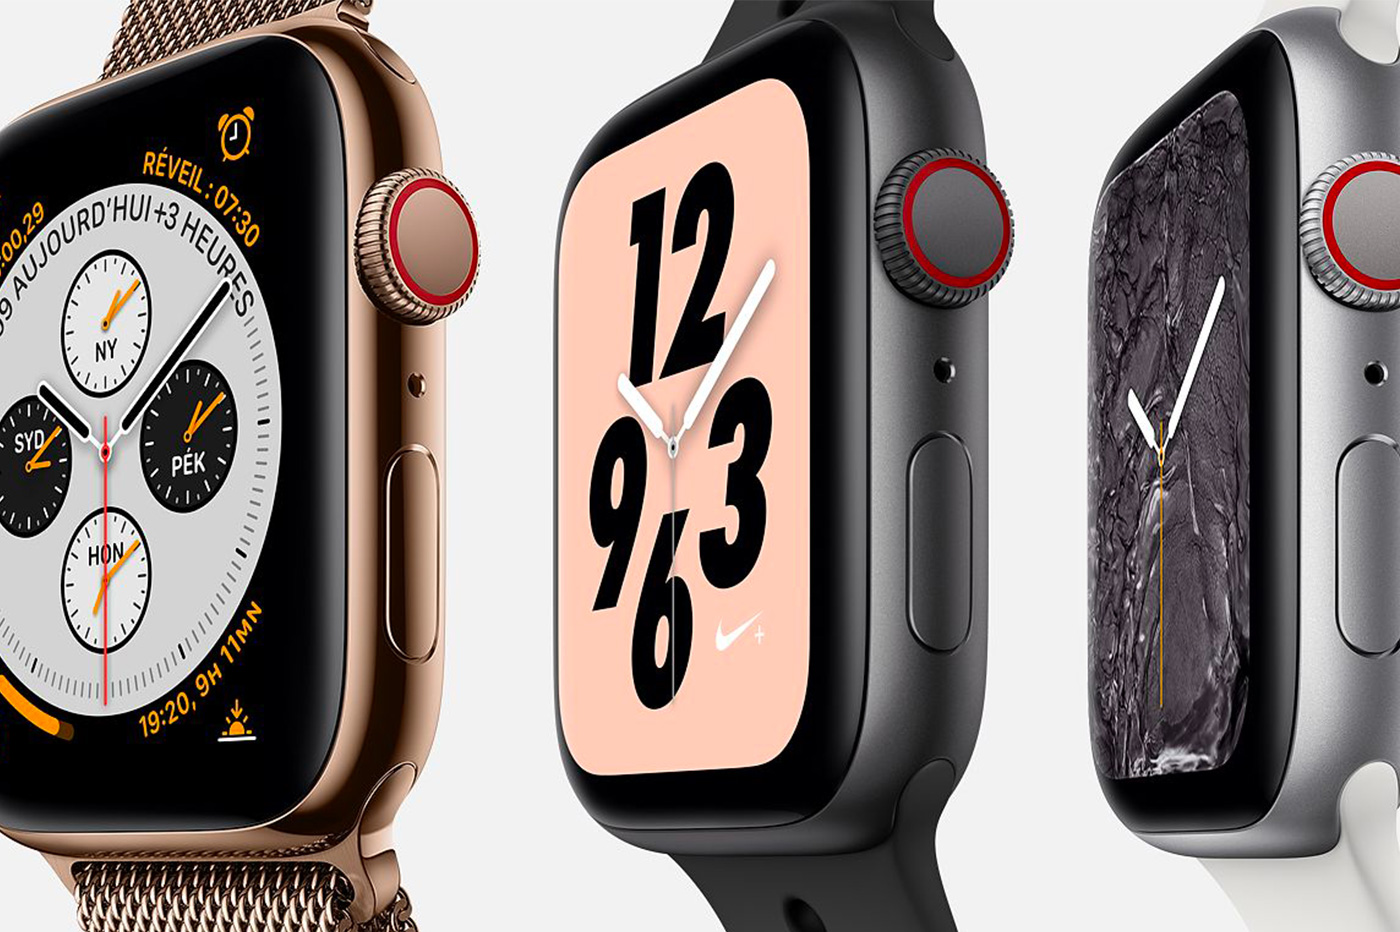 Où acheter l'Apple Watch Series 4 au meilleur prix?